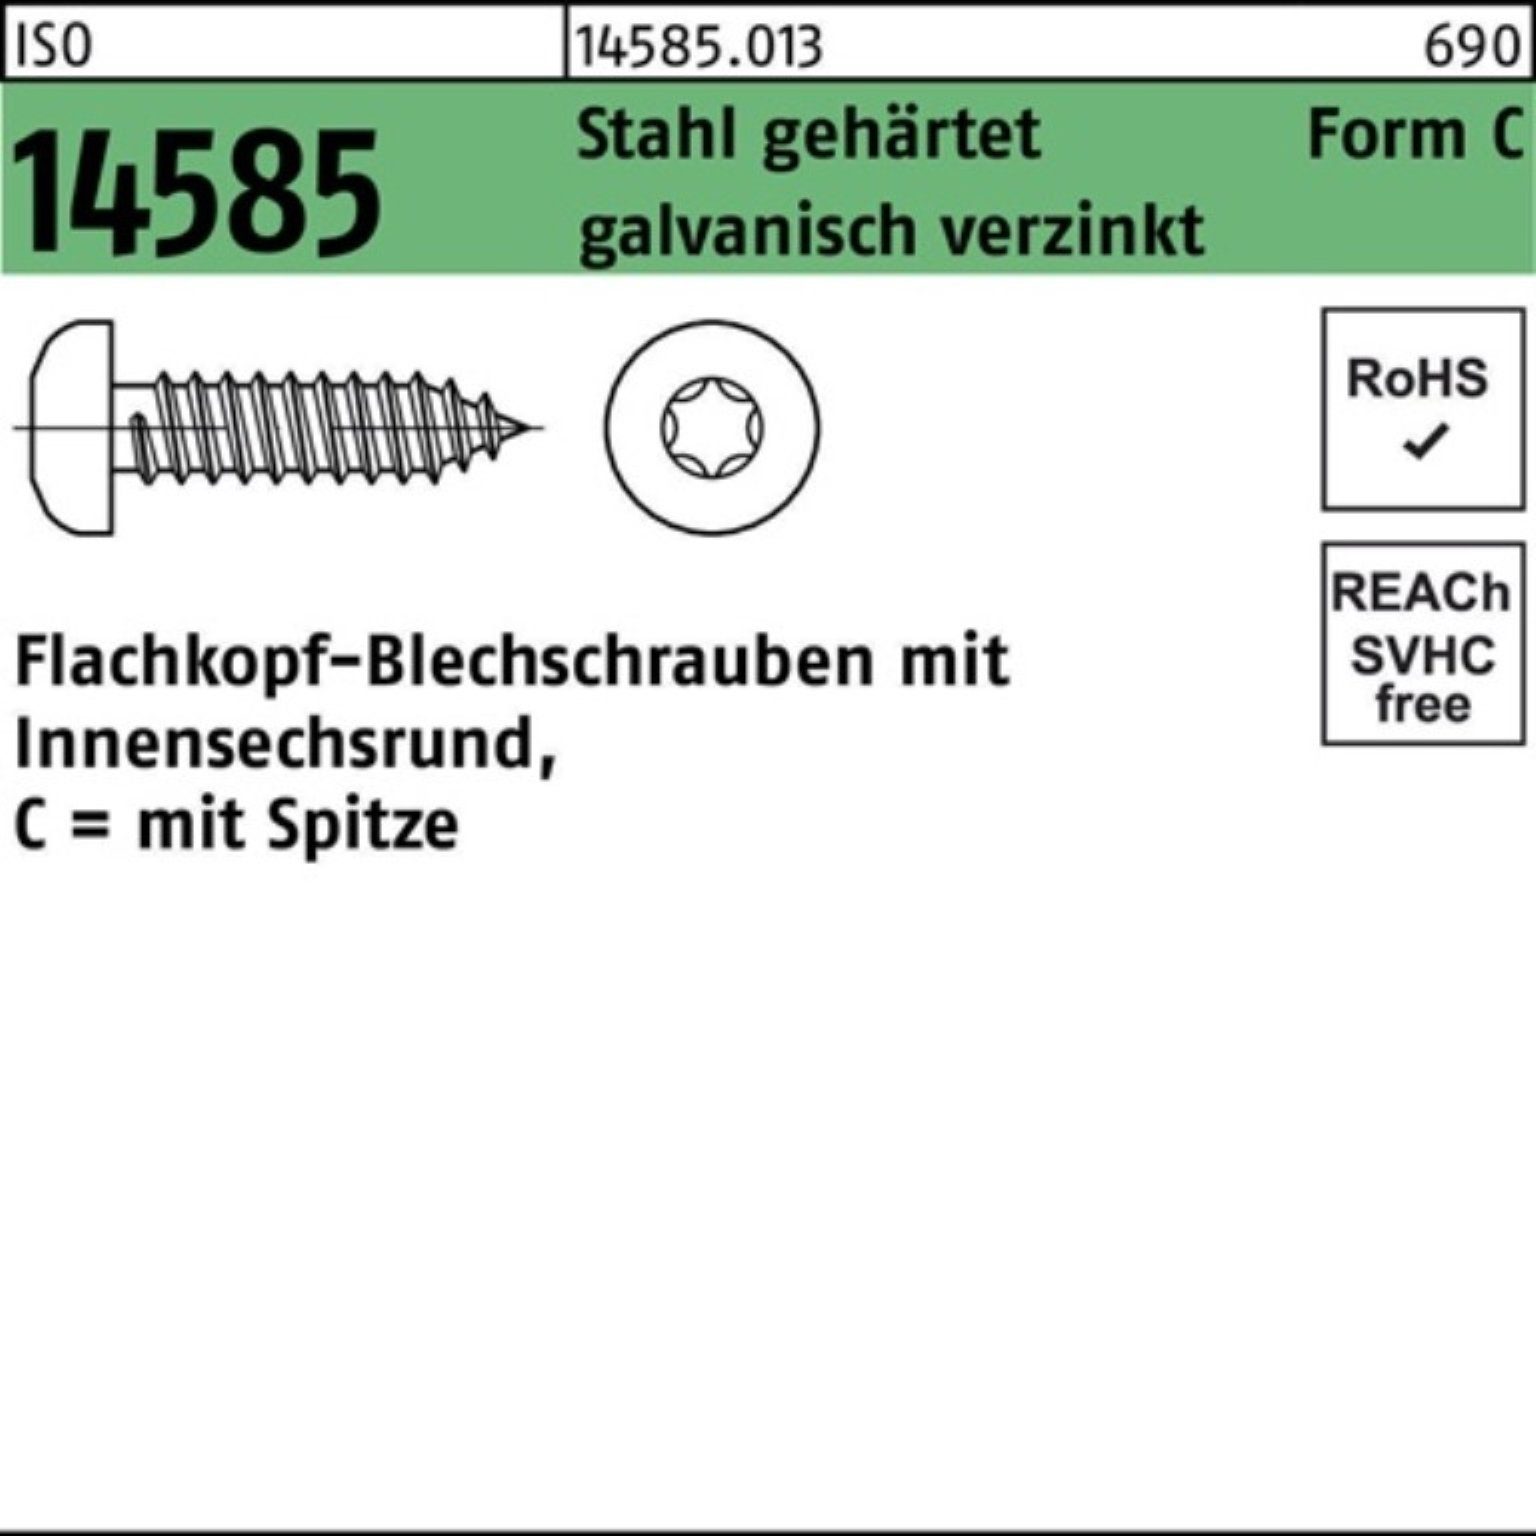 Blechschraube Reyher ISR/Spitze ISO Pack -C-T20 Blechschraube 14585 geh. 500er 3,9x45 Stahl